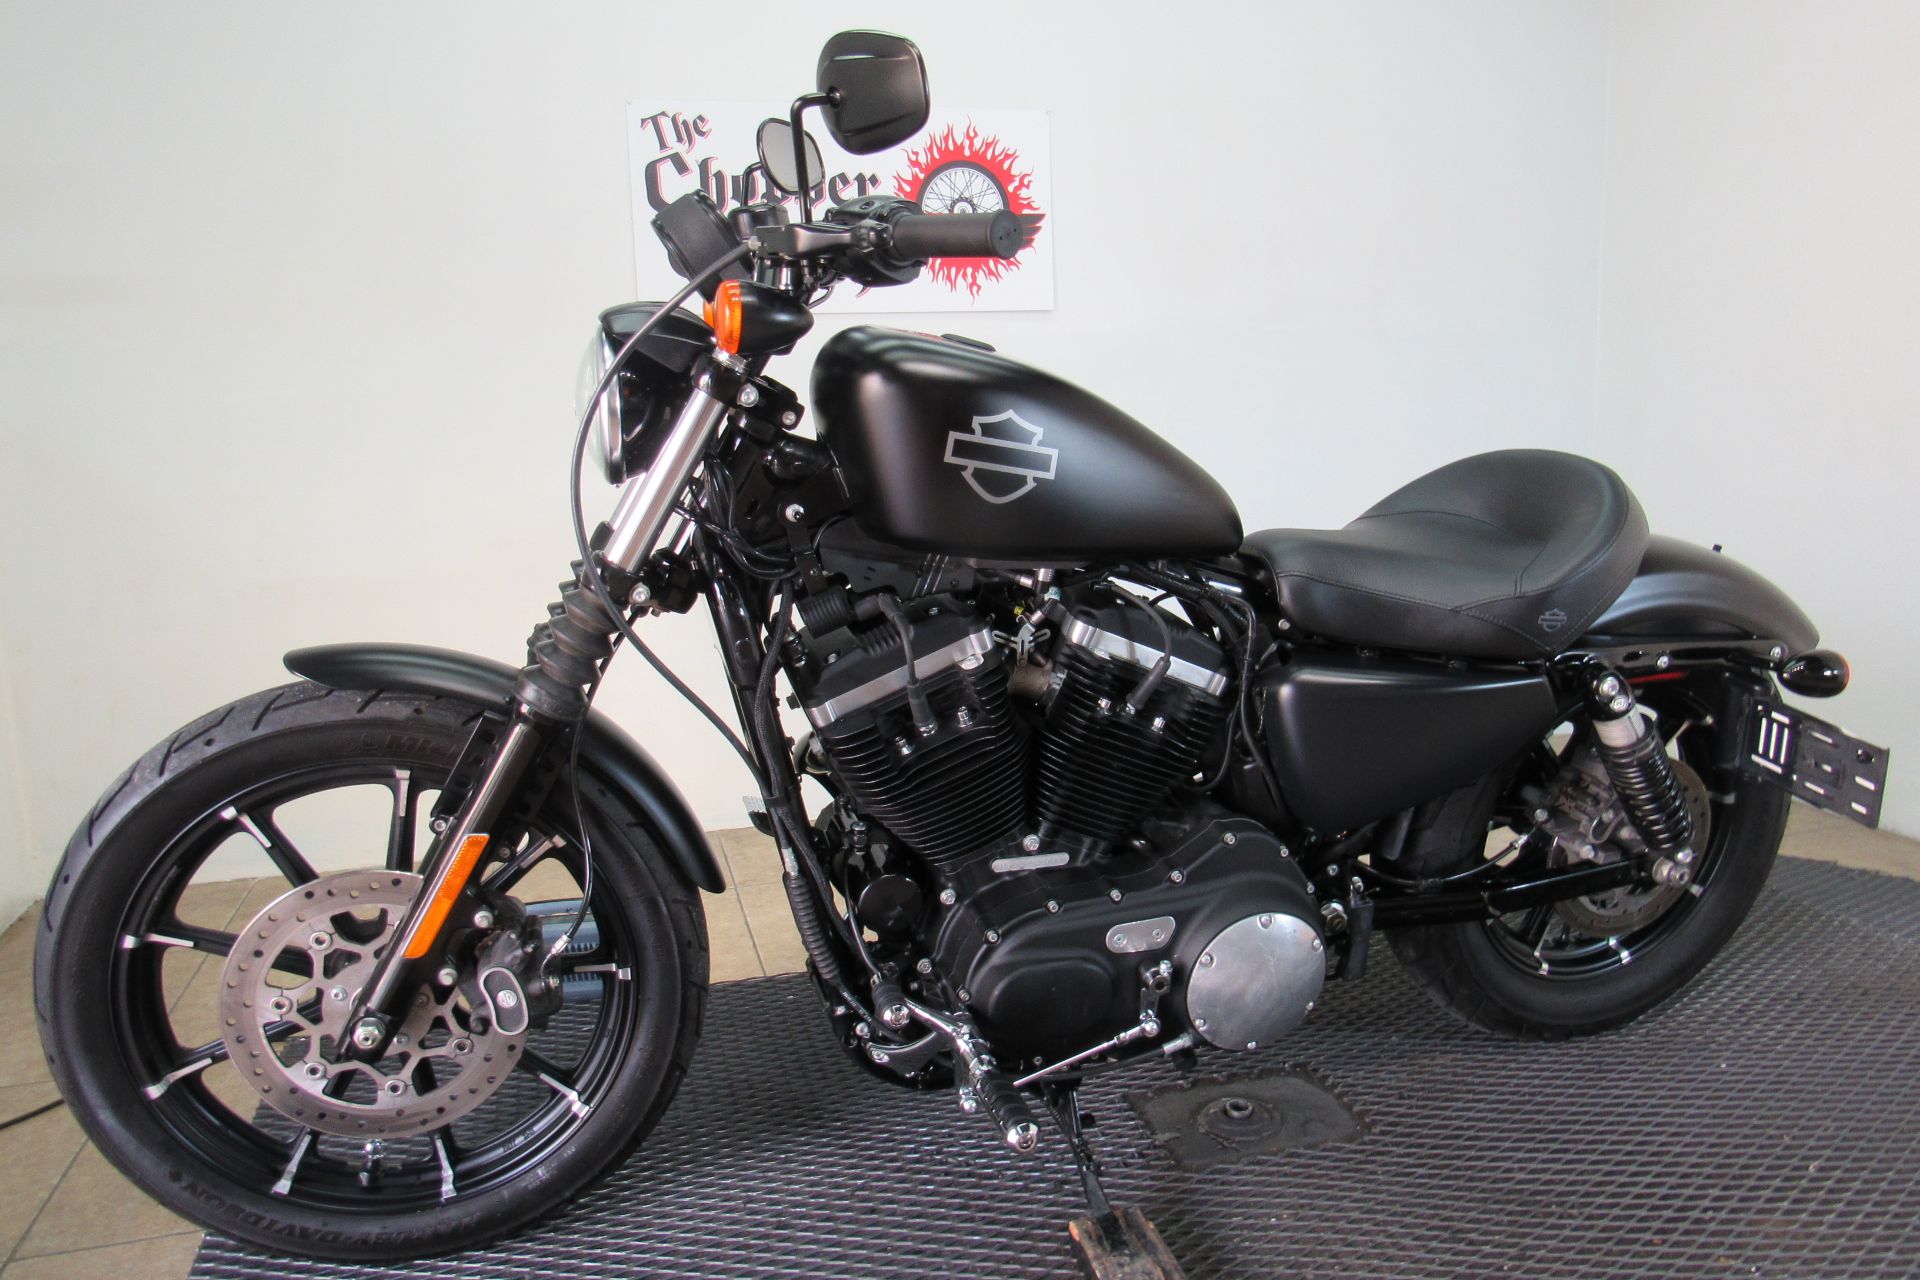 2020 Harley-Davidson Iron 883™ in Temecula, California - Photo 4